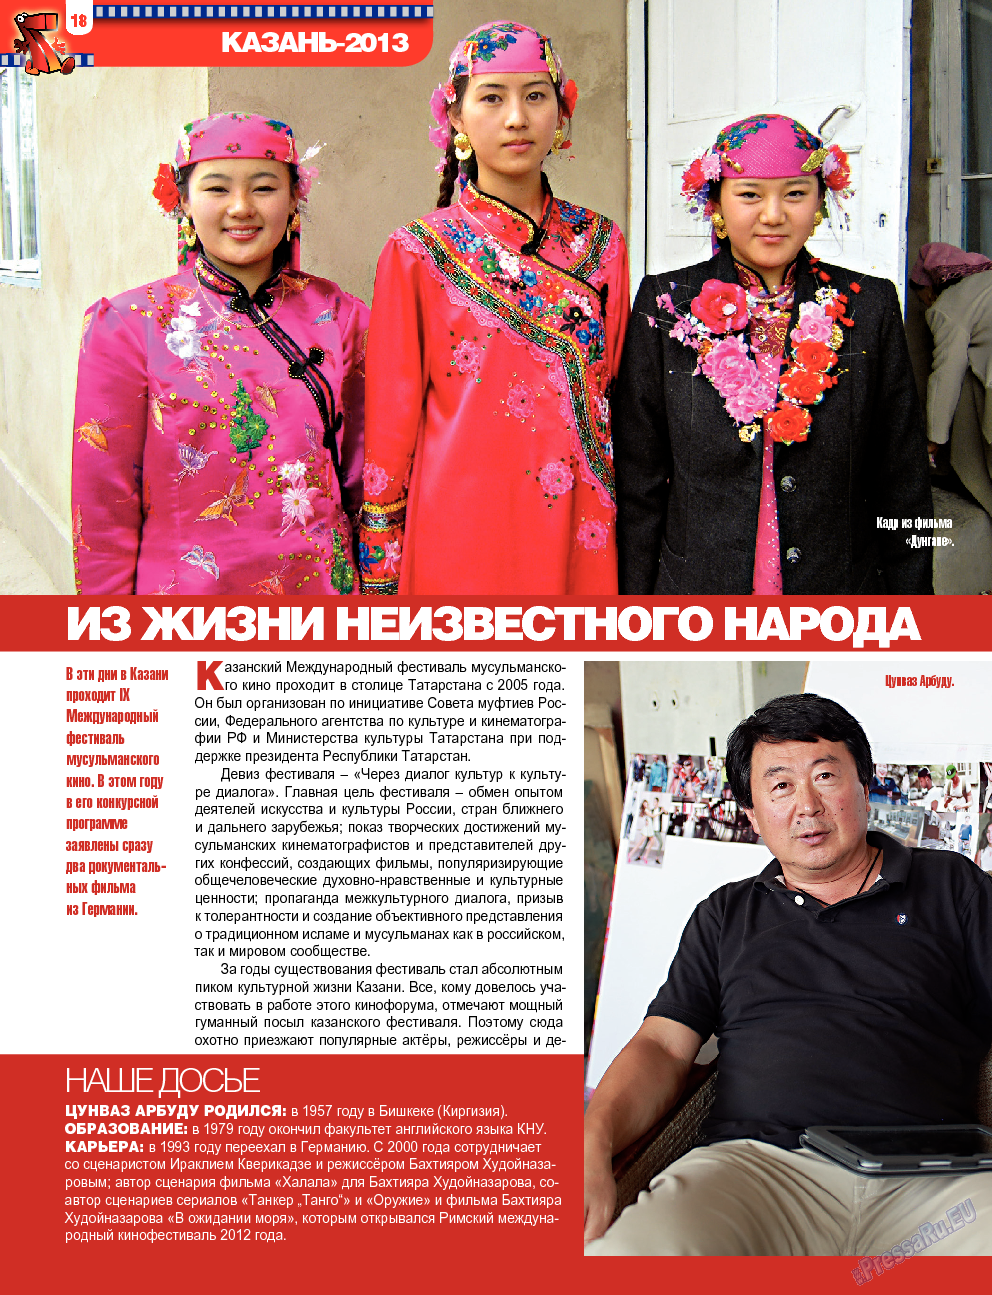 7плюс7я (журнал). 2013 год, номер 36, стр. 18